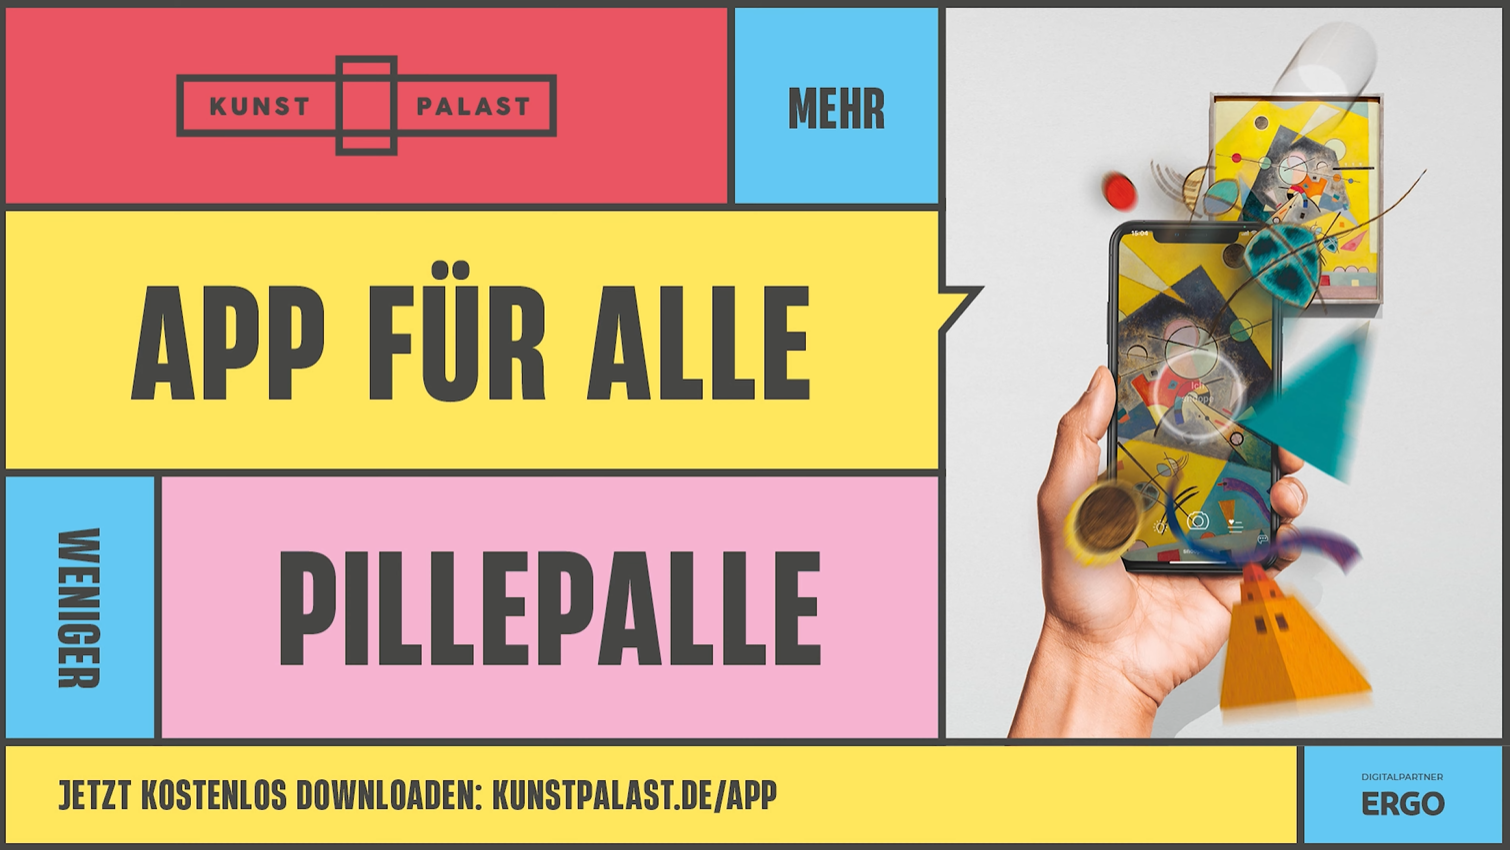 The Kunstpalast-App